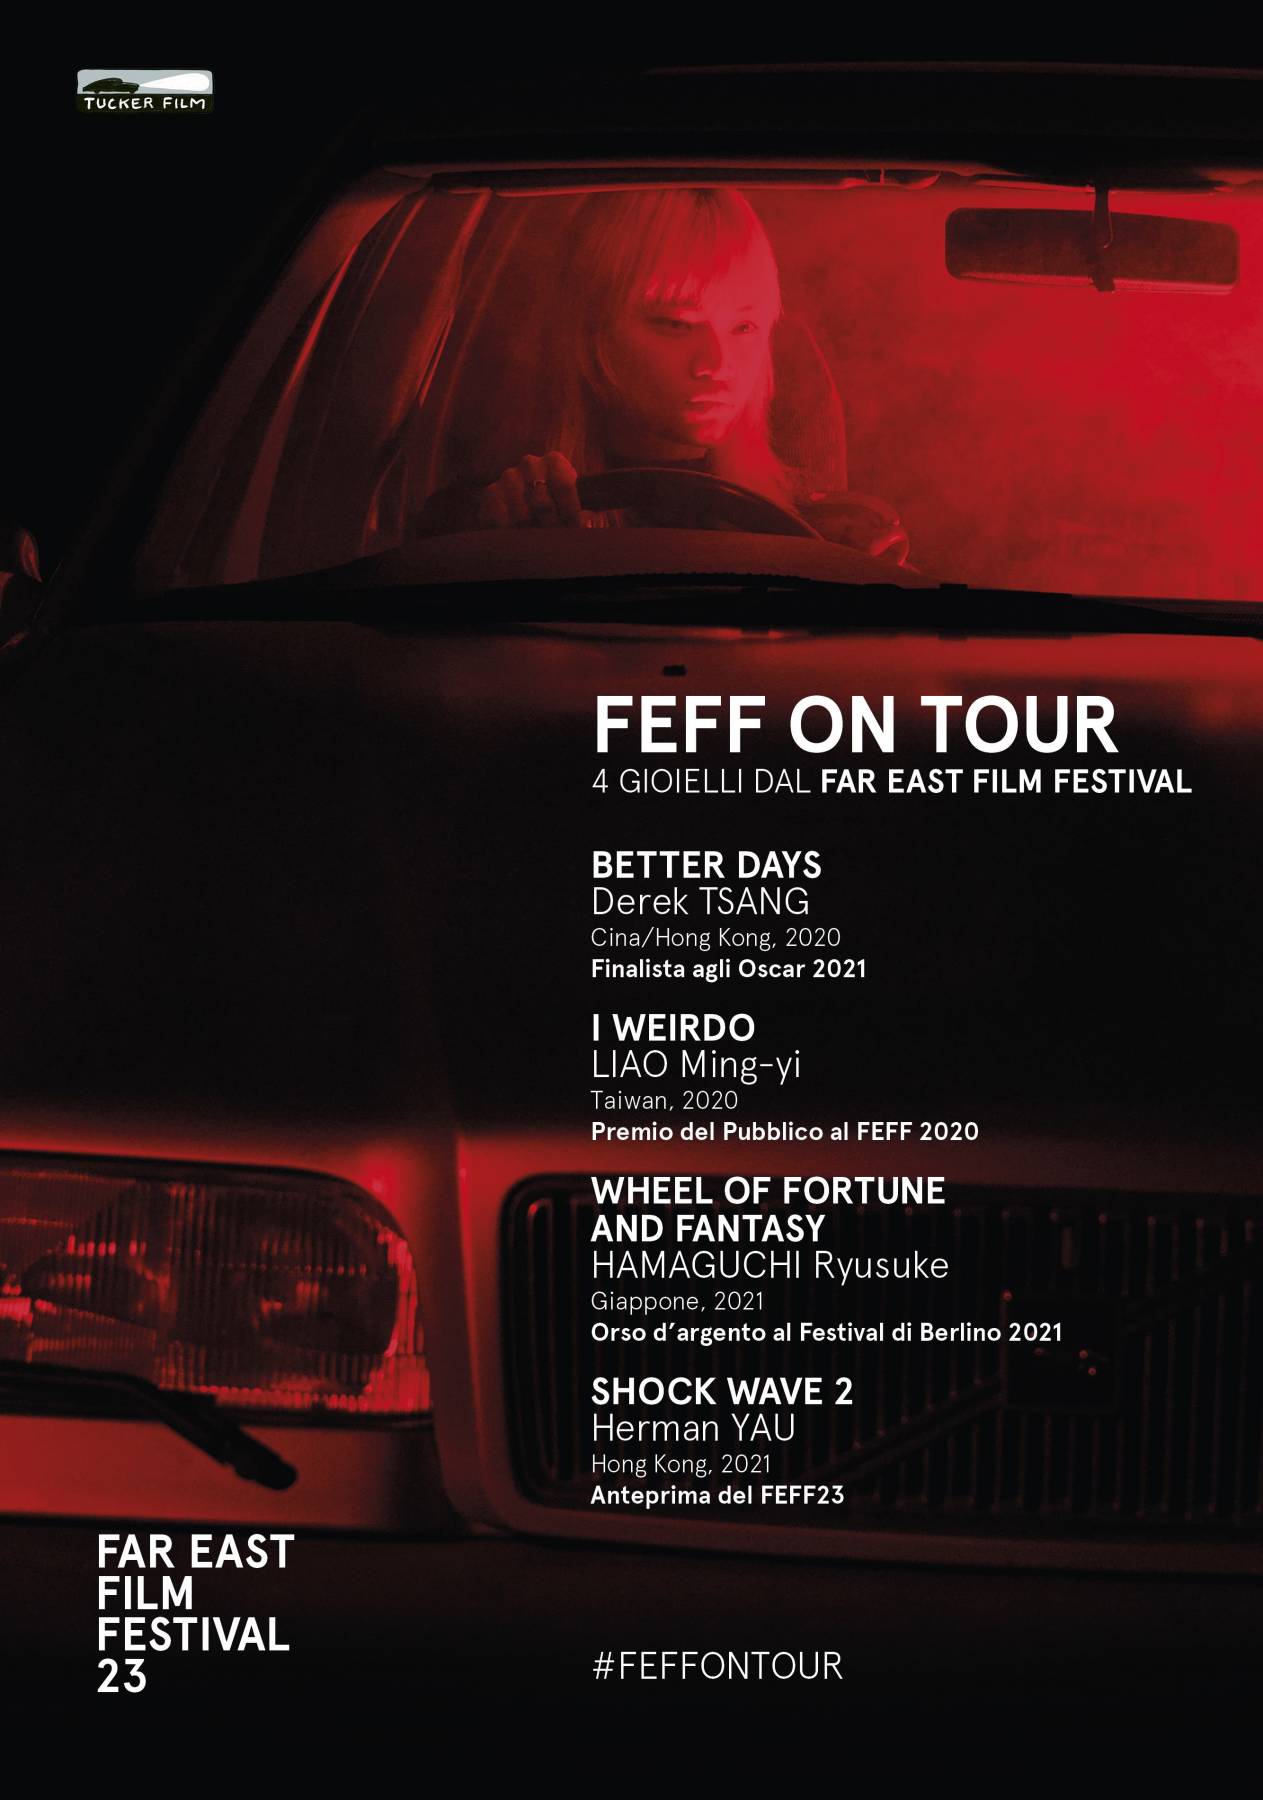 FEFF, Far East Film Festival, FEFF on tour, FEFF Udine